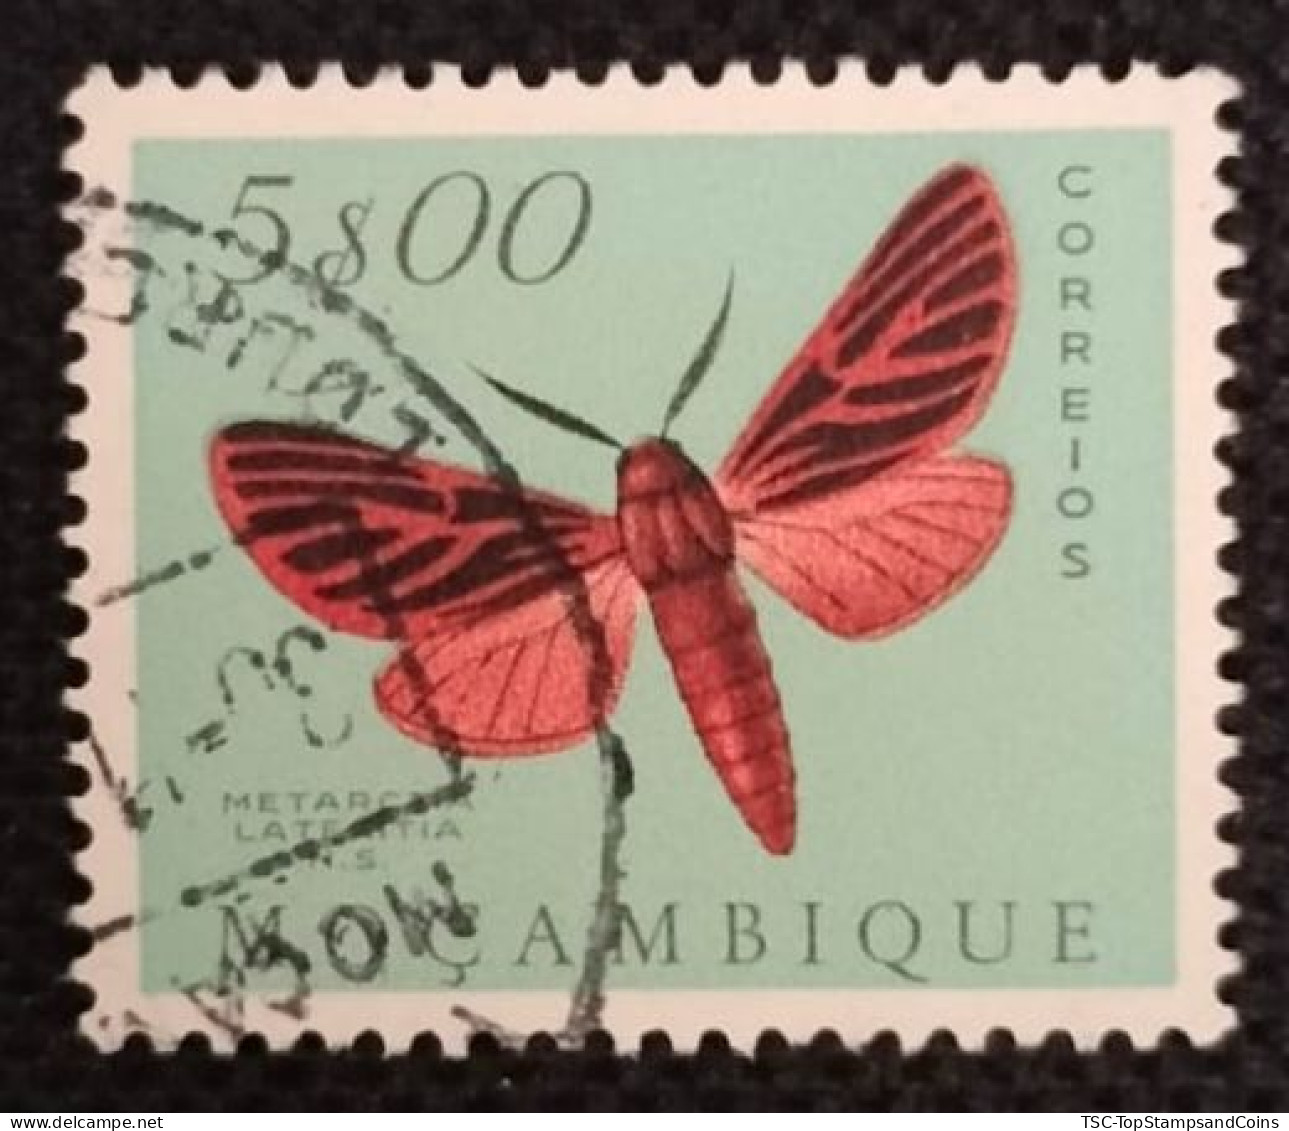 MOZPO0403UC - Mozambique Butterflies  - 5$00 Used Stamp - Mozambique - 1953 - Mozambique